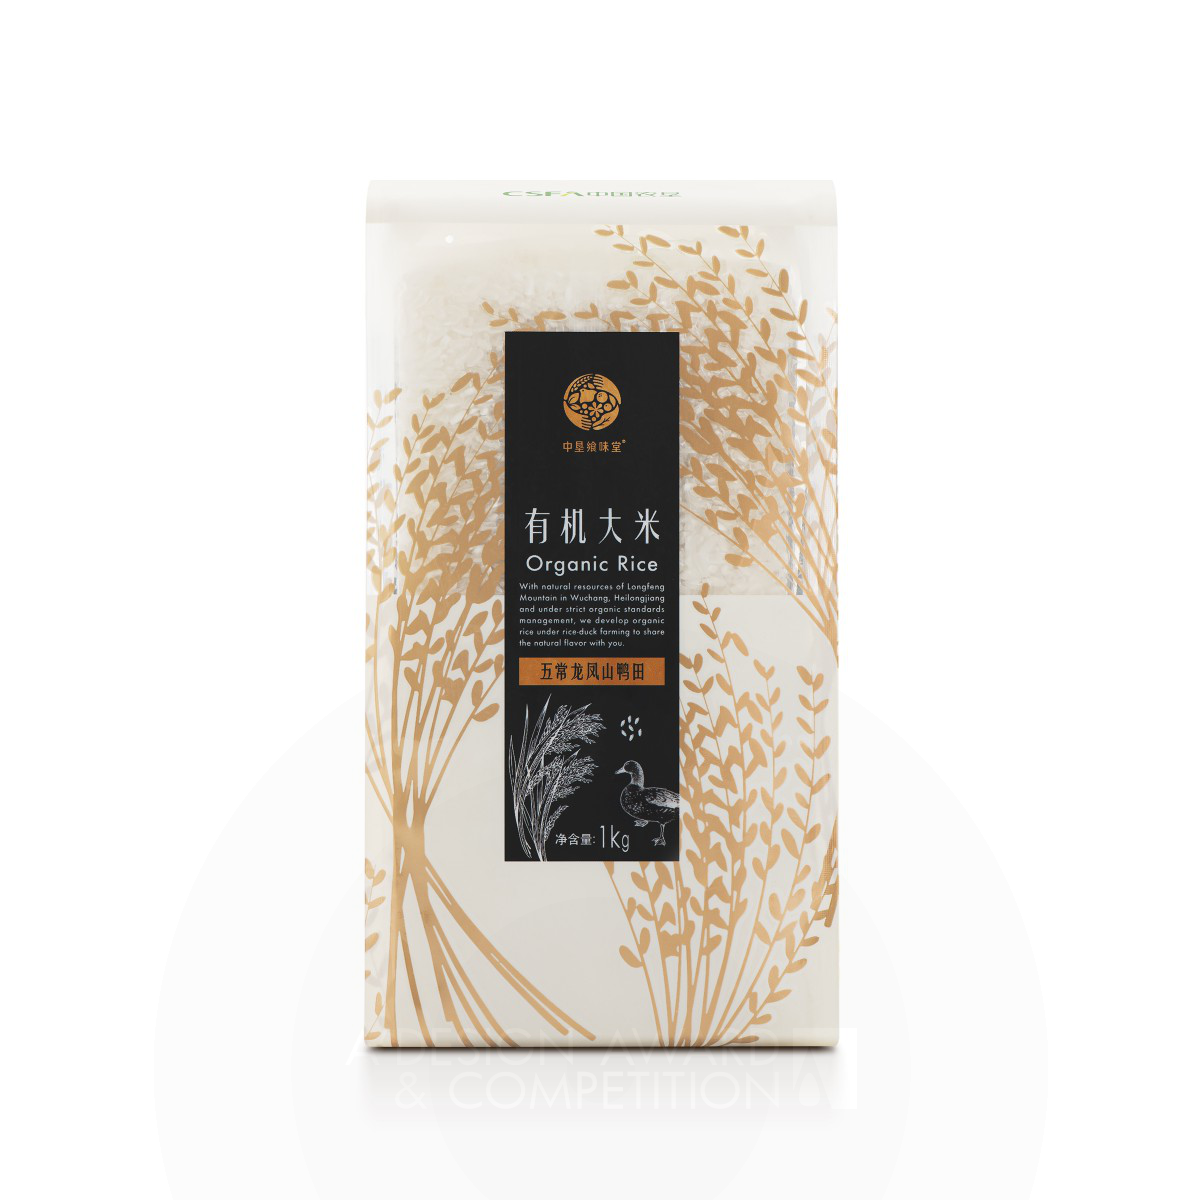 Fudesign&#039;s Award-Winning Organic Rice Packaging Design